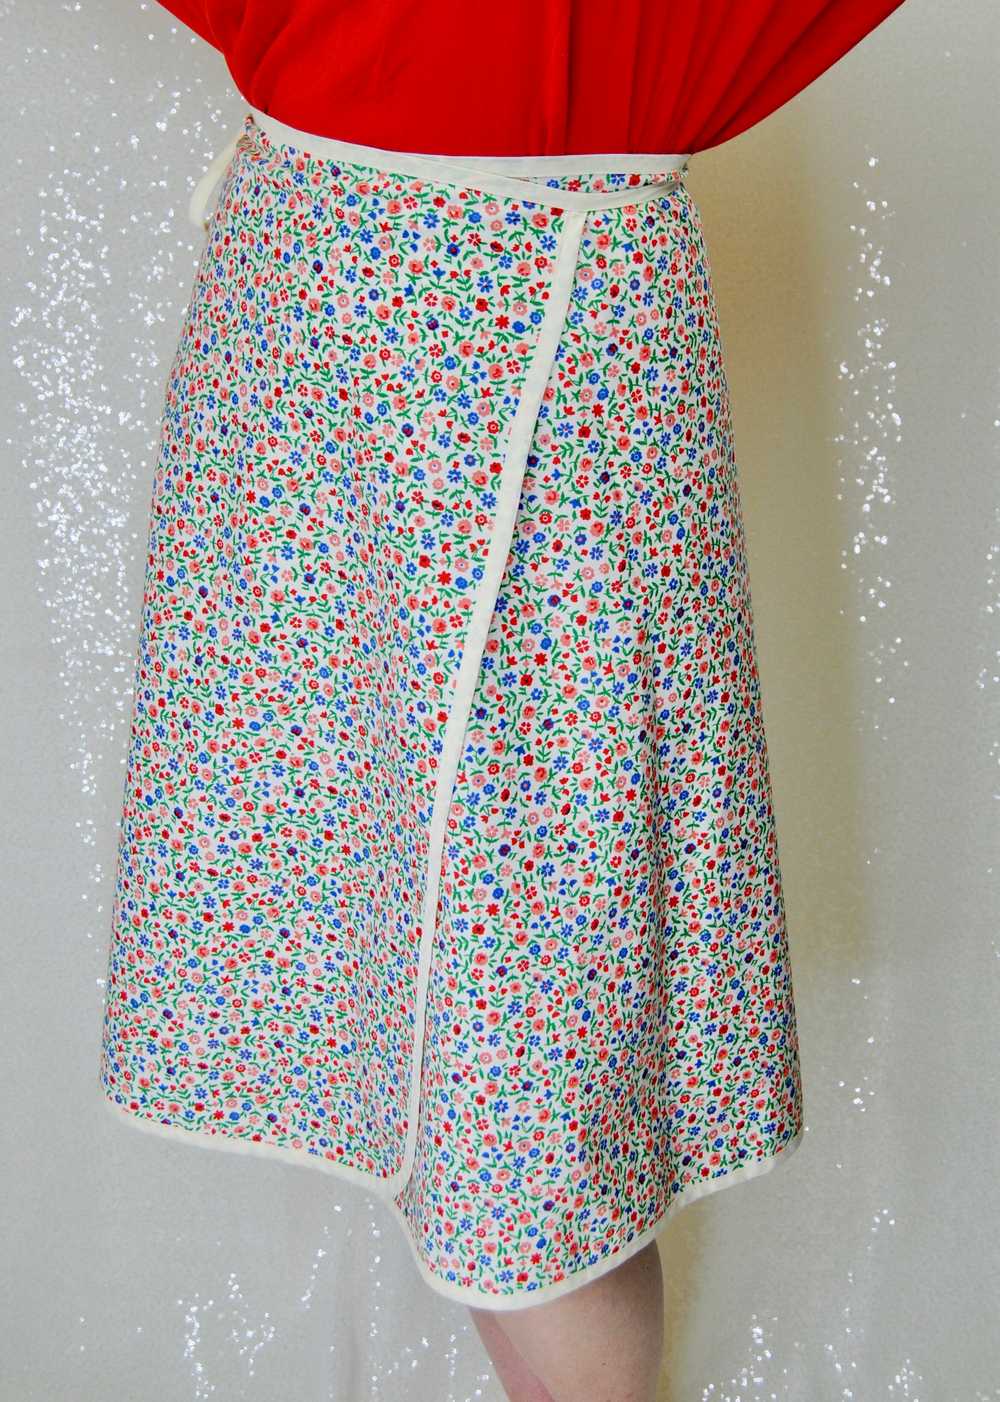 1970s Vintage Wrap Skirt - Open Size - image 3